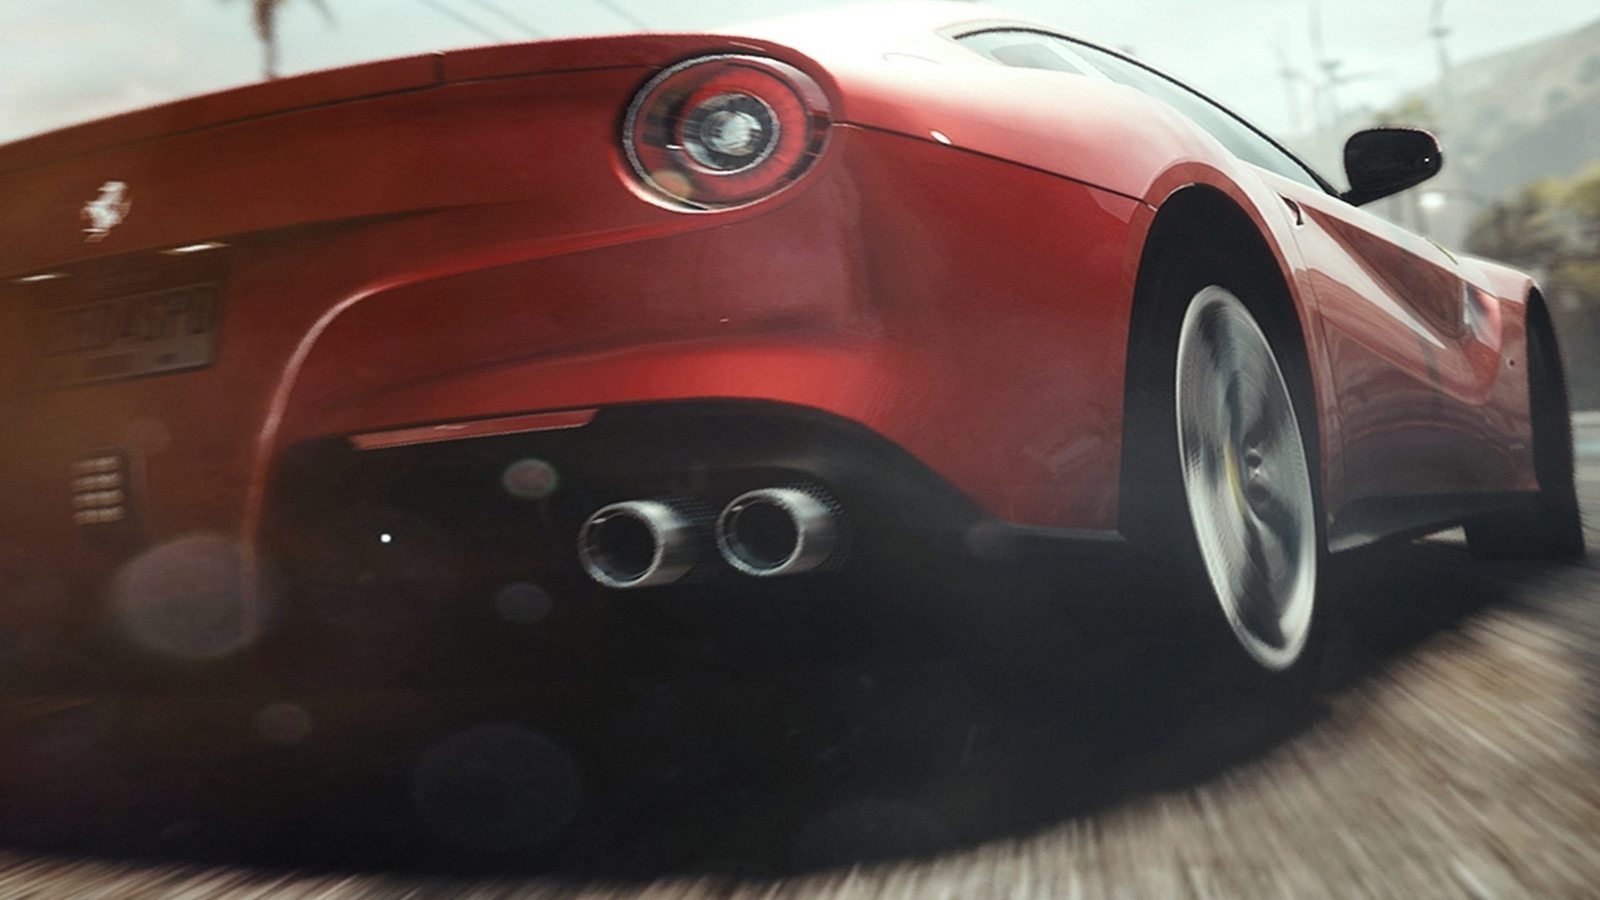 Need For Speed The Run Jogos Ps3 PSN Digital Playstation 3